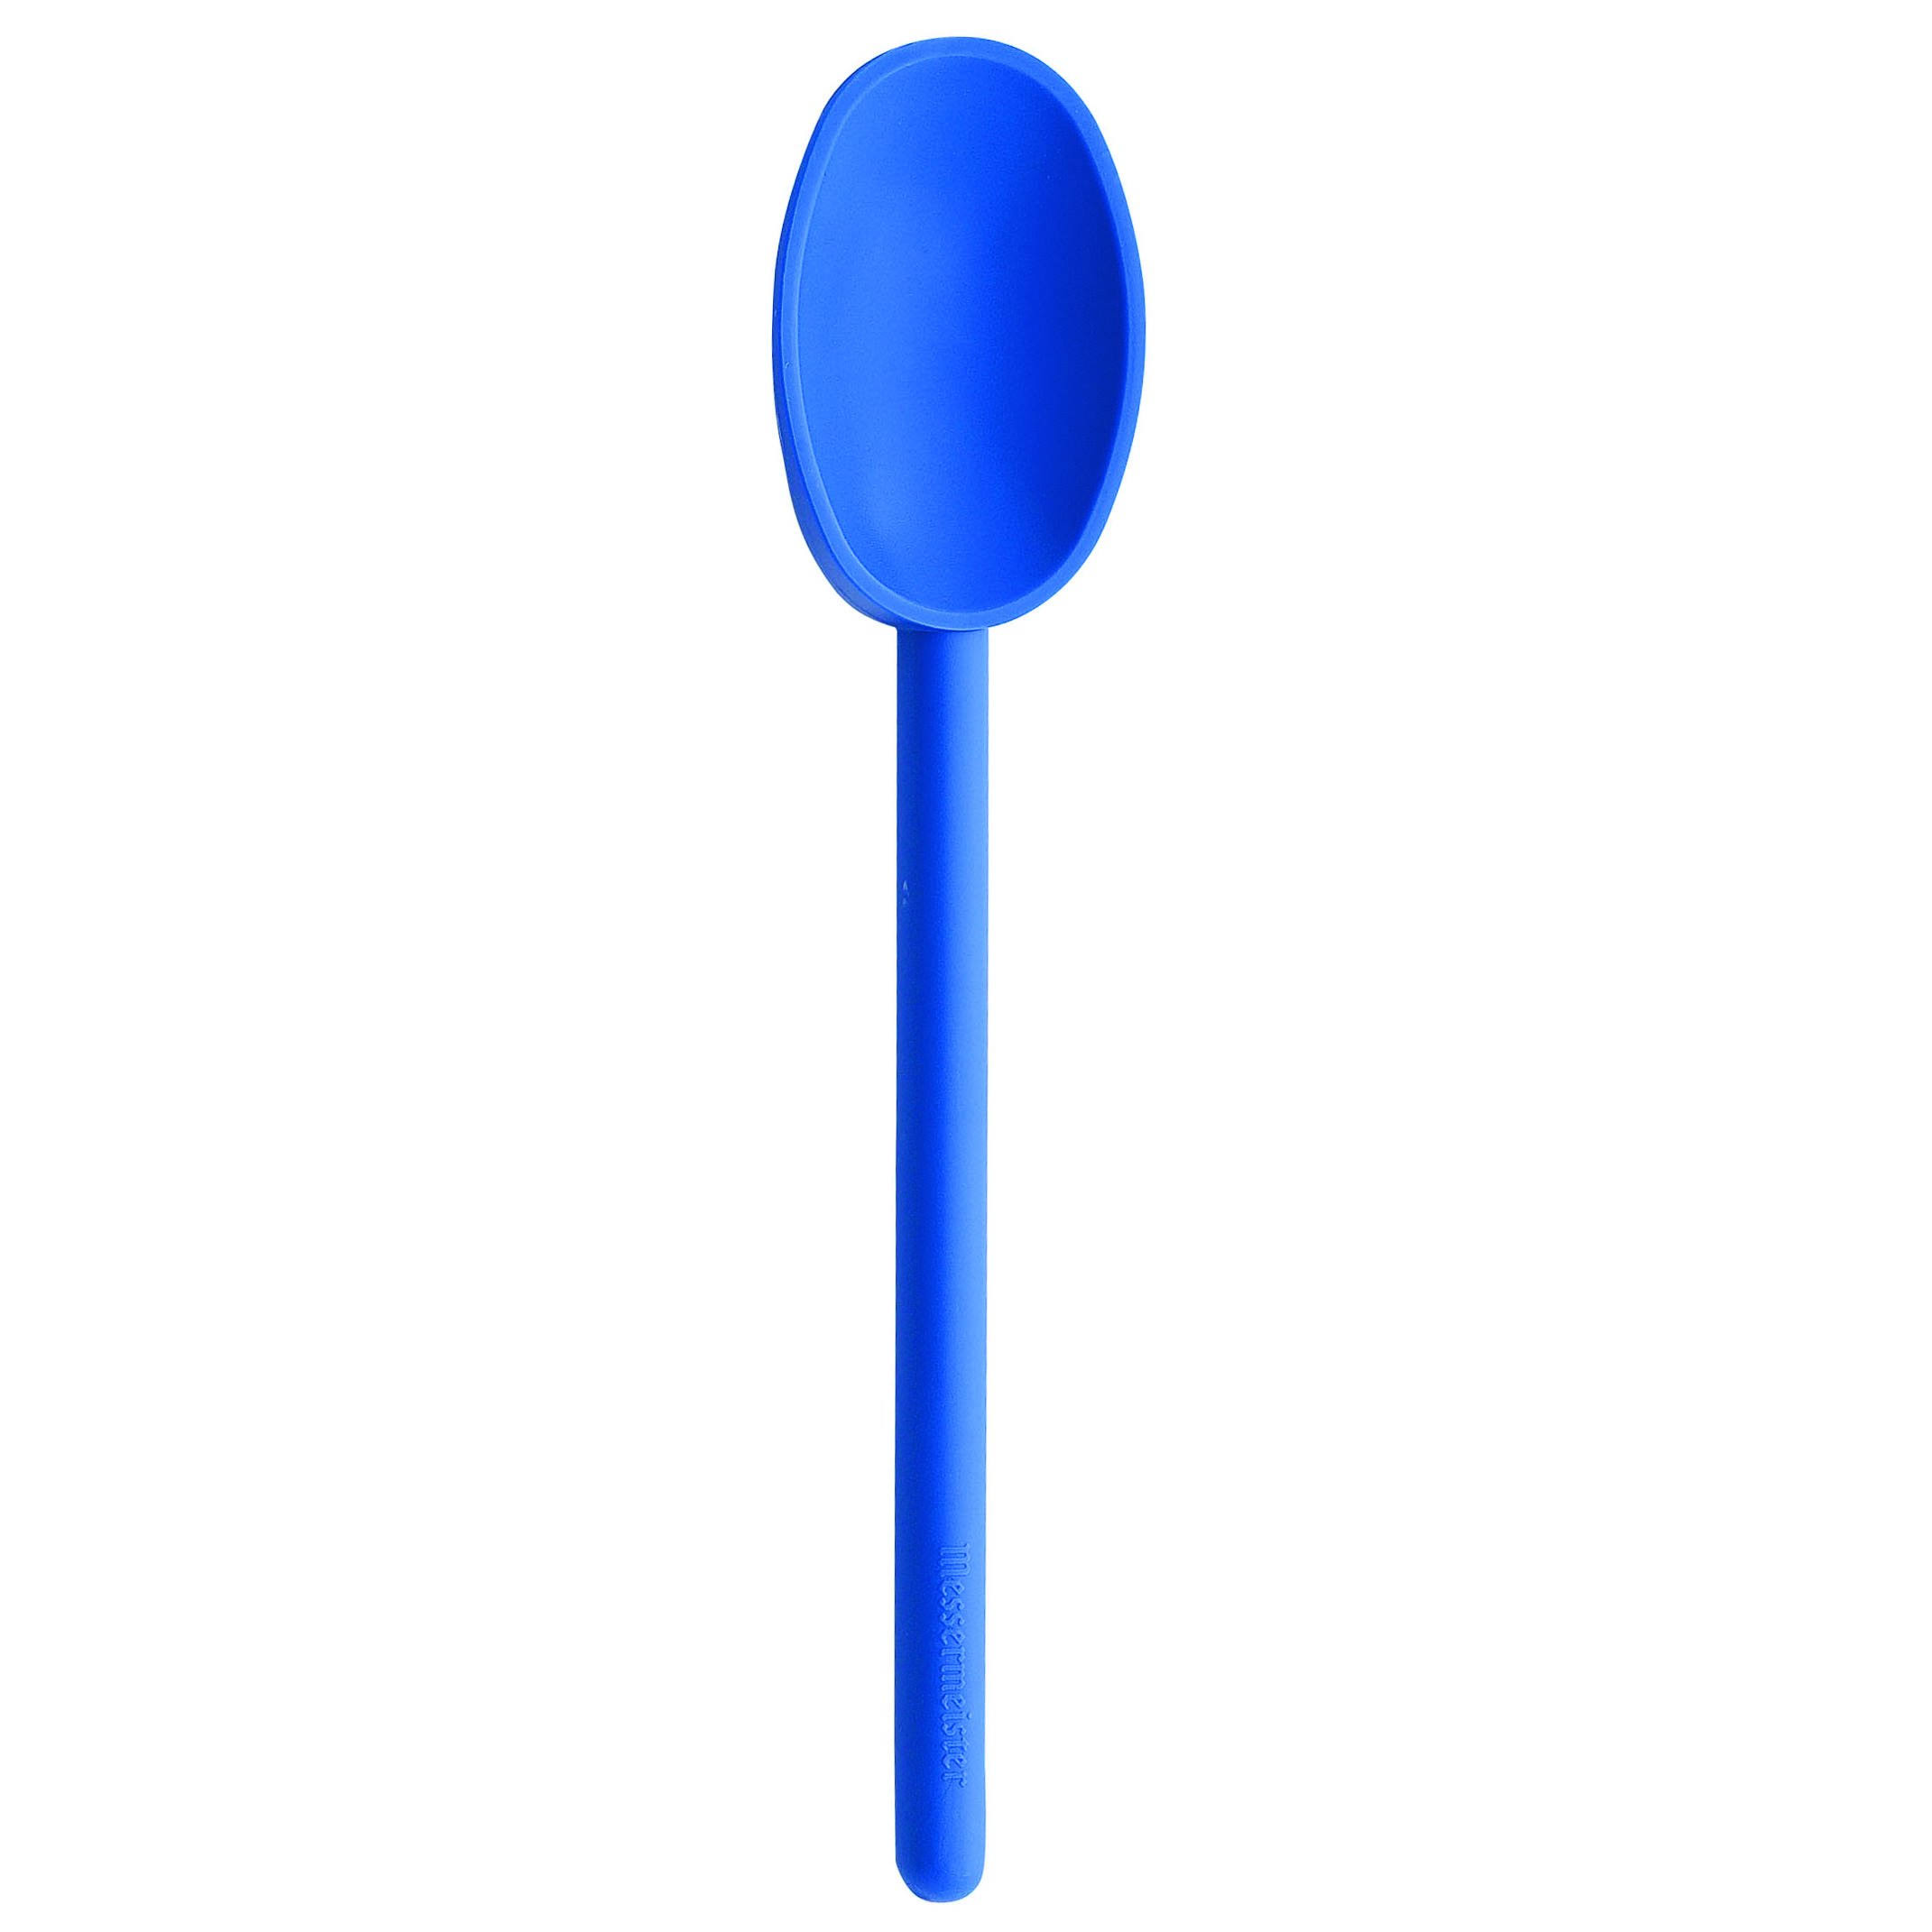 Messermeister High Heat Nylon Cooking Spoon, 12 inch, Blue